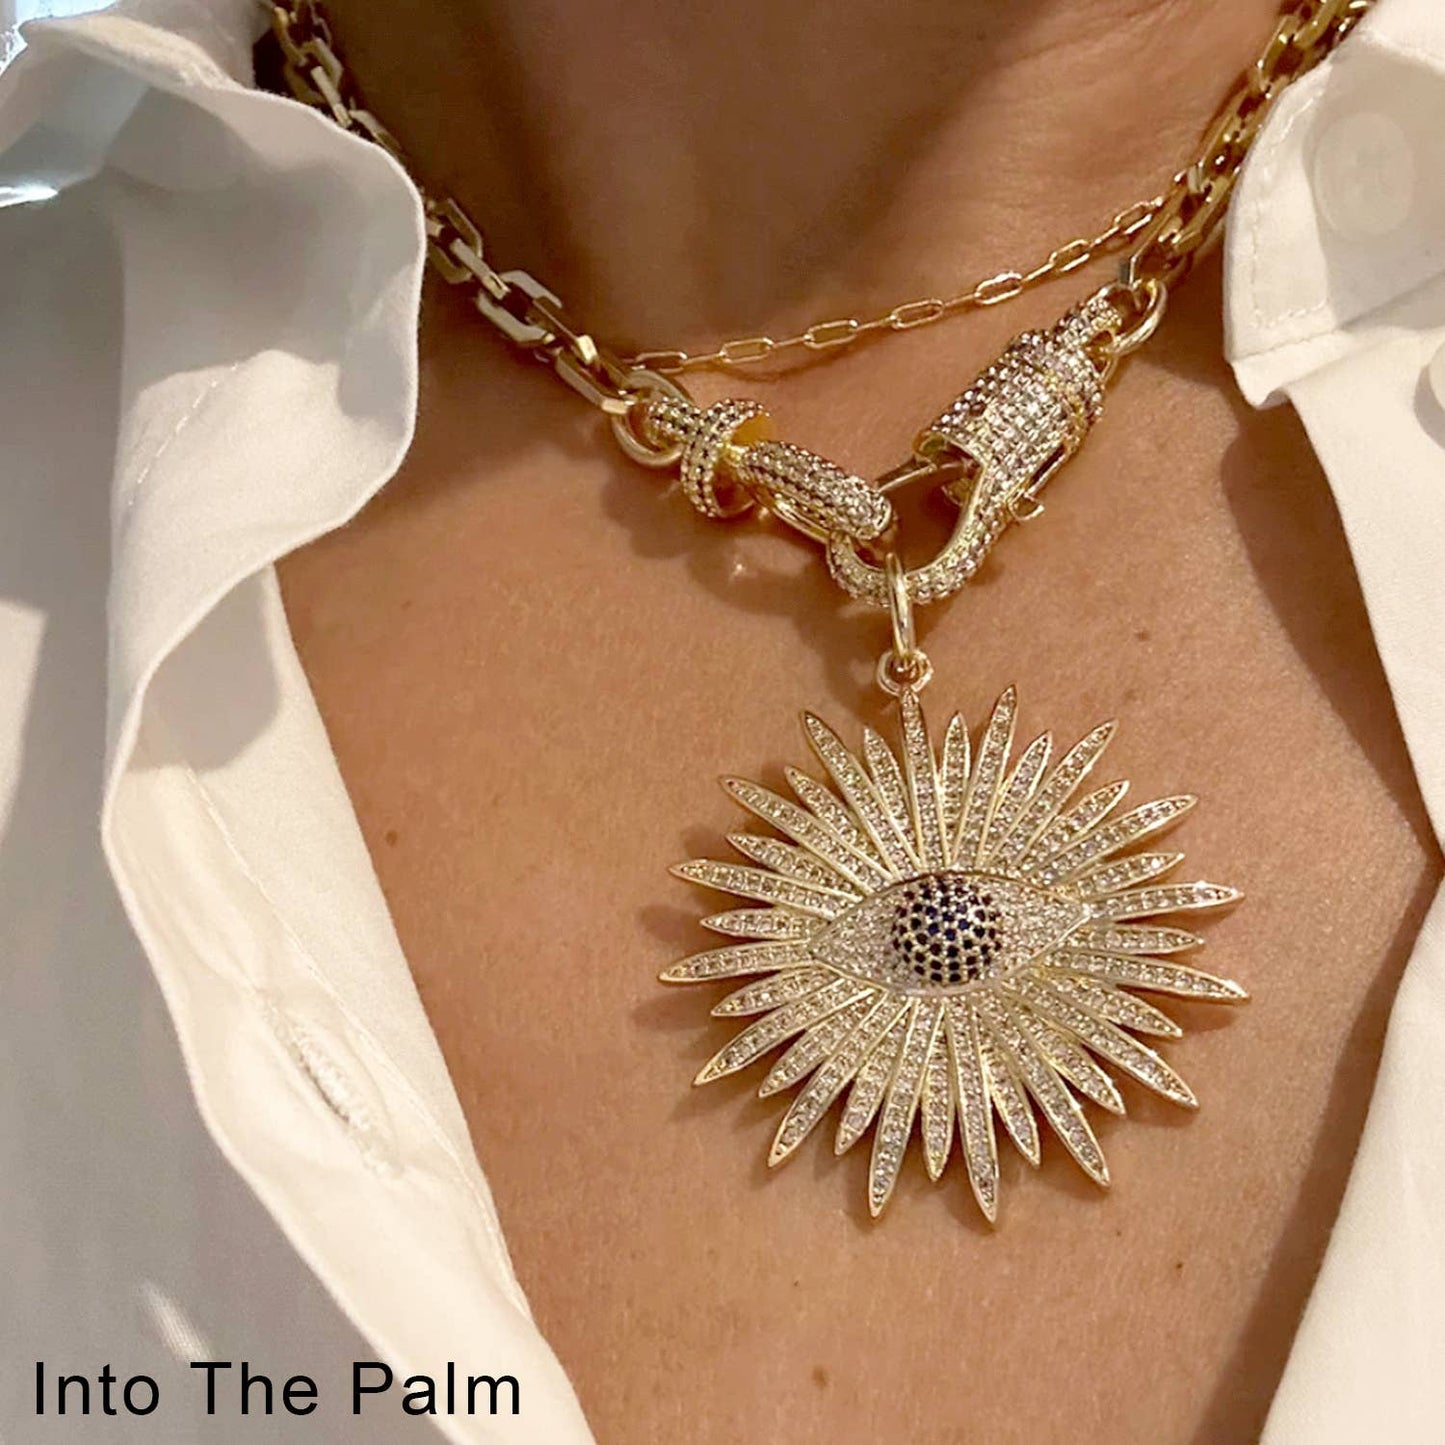 Love, Lisa - Elaine Elegant Pave Clasp Necklace: Gold / 16"